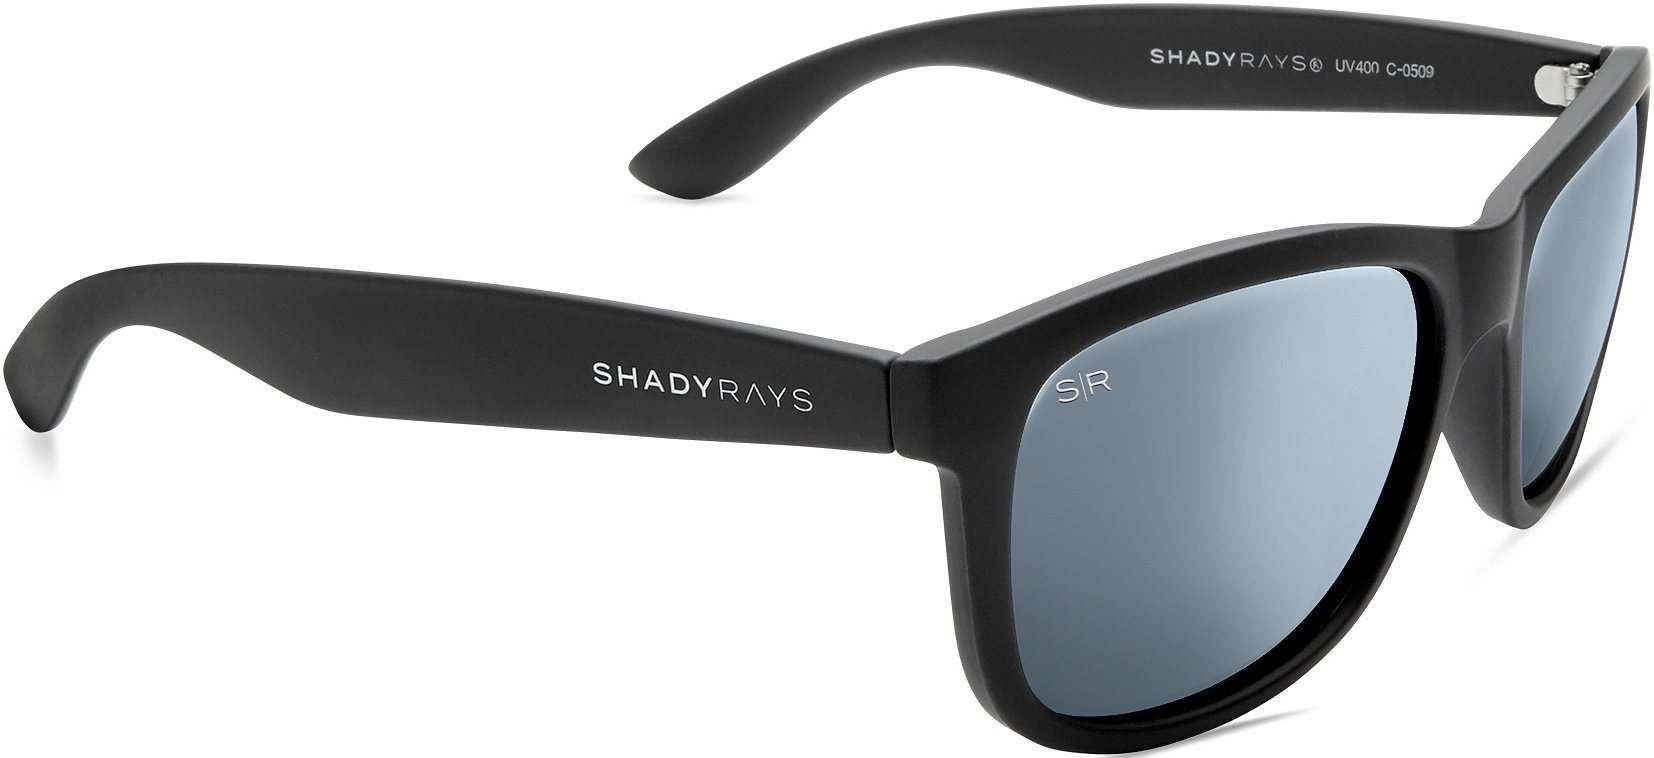 Signature Series – Shady Rays®